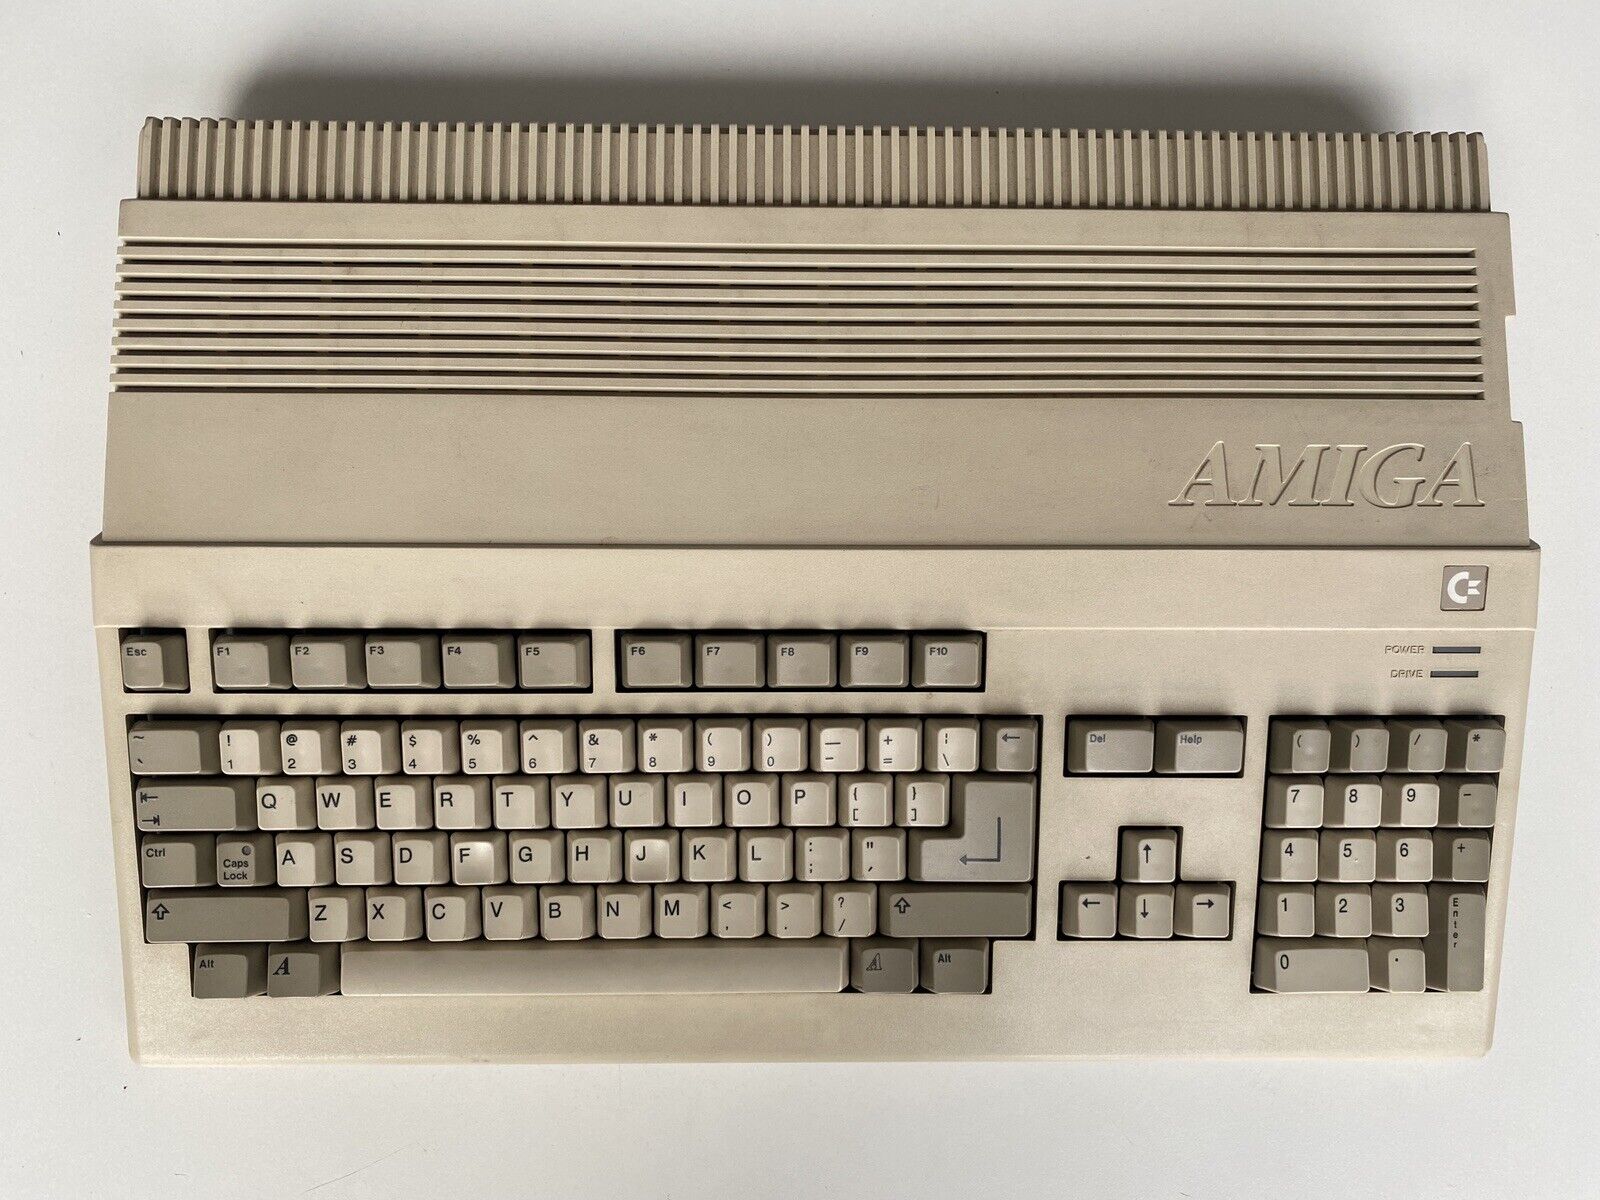 Commodore Amiga a500 Turns on